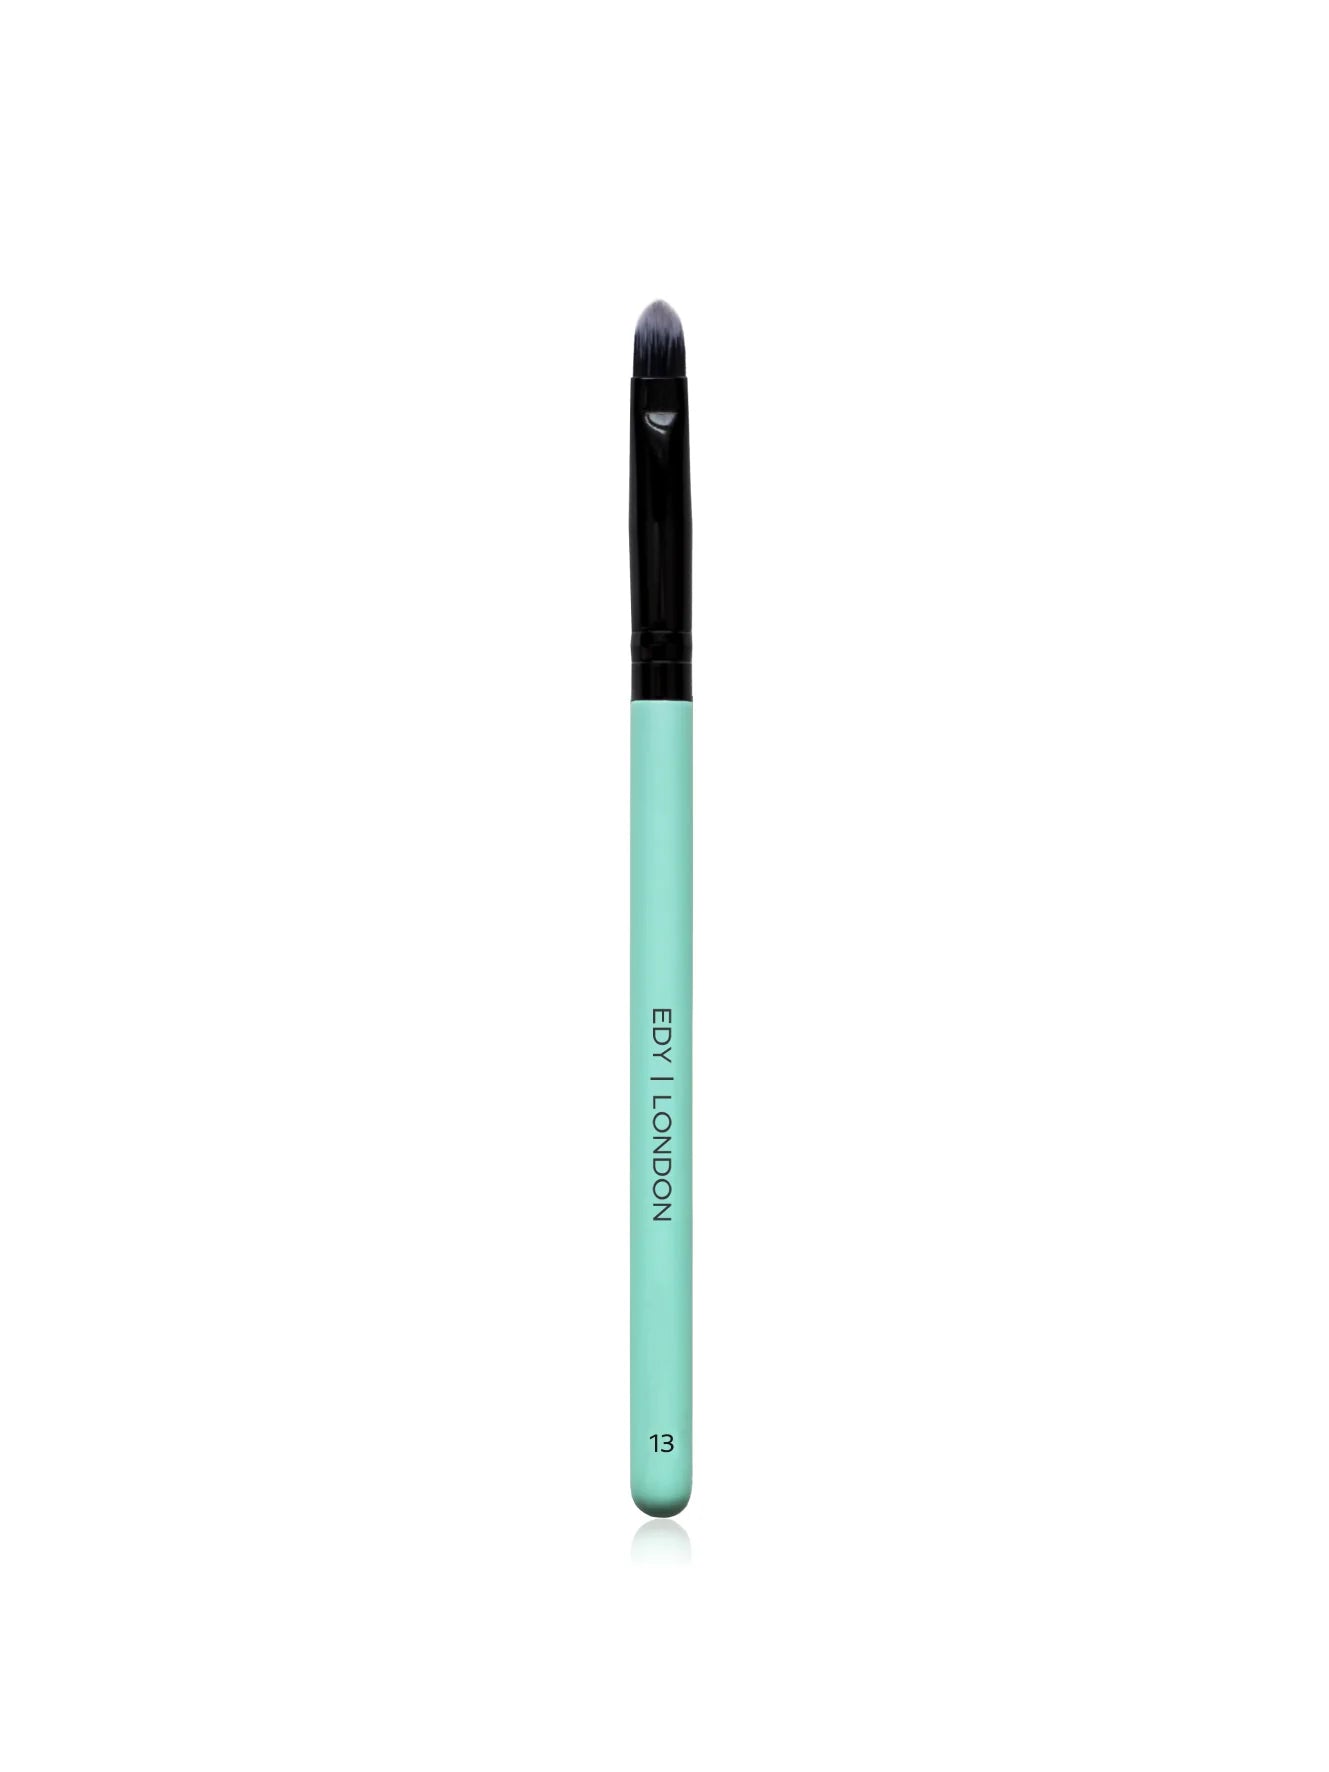 Precision Pencil / Shader Brush 13 Make-up Brush EDY LONDON Turquoise   - EDY LONDON PRODUCTS UK - The Best Makeup Brushes - shop.edy.london